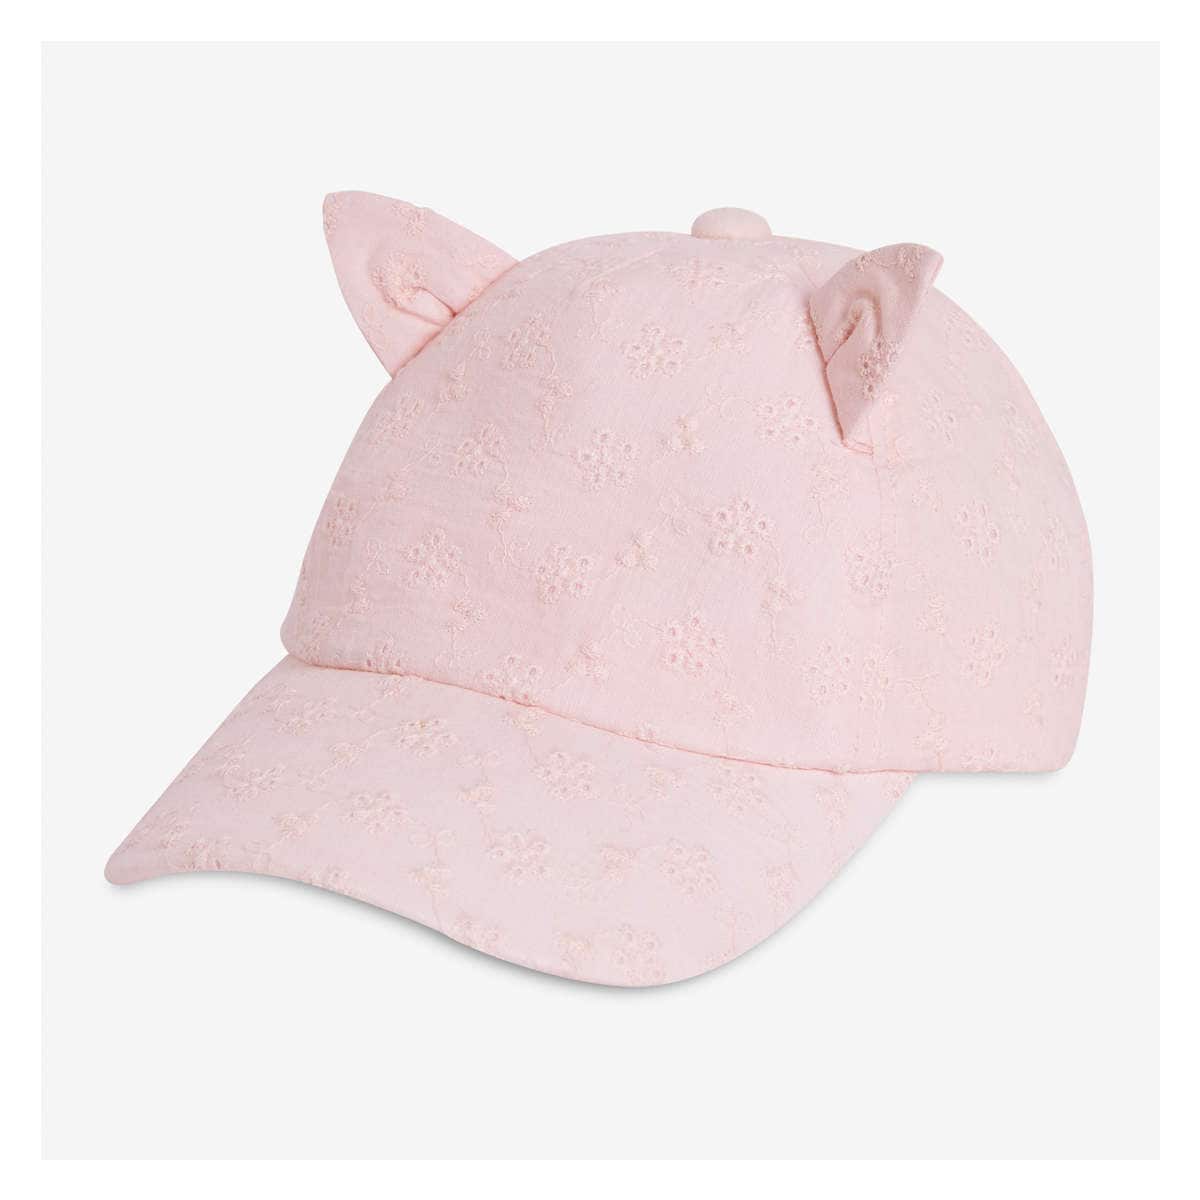 Toddler Girls' Cat Baseball Cap in Pink from Joe Fresh